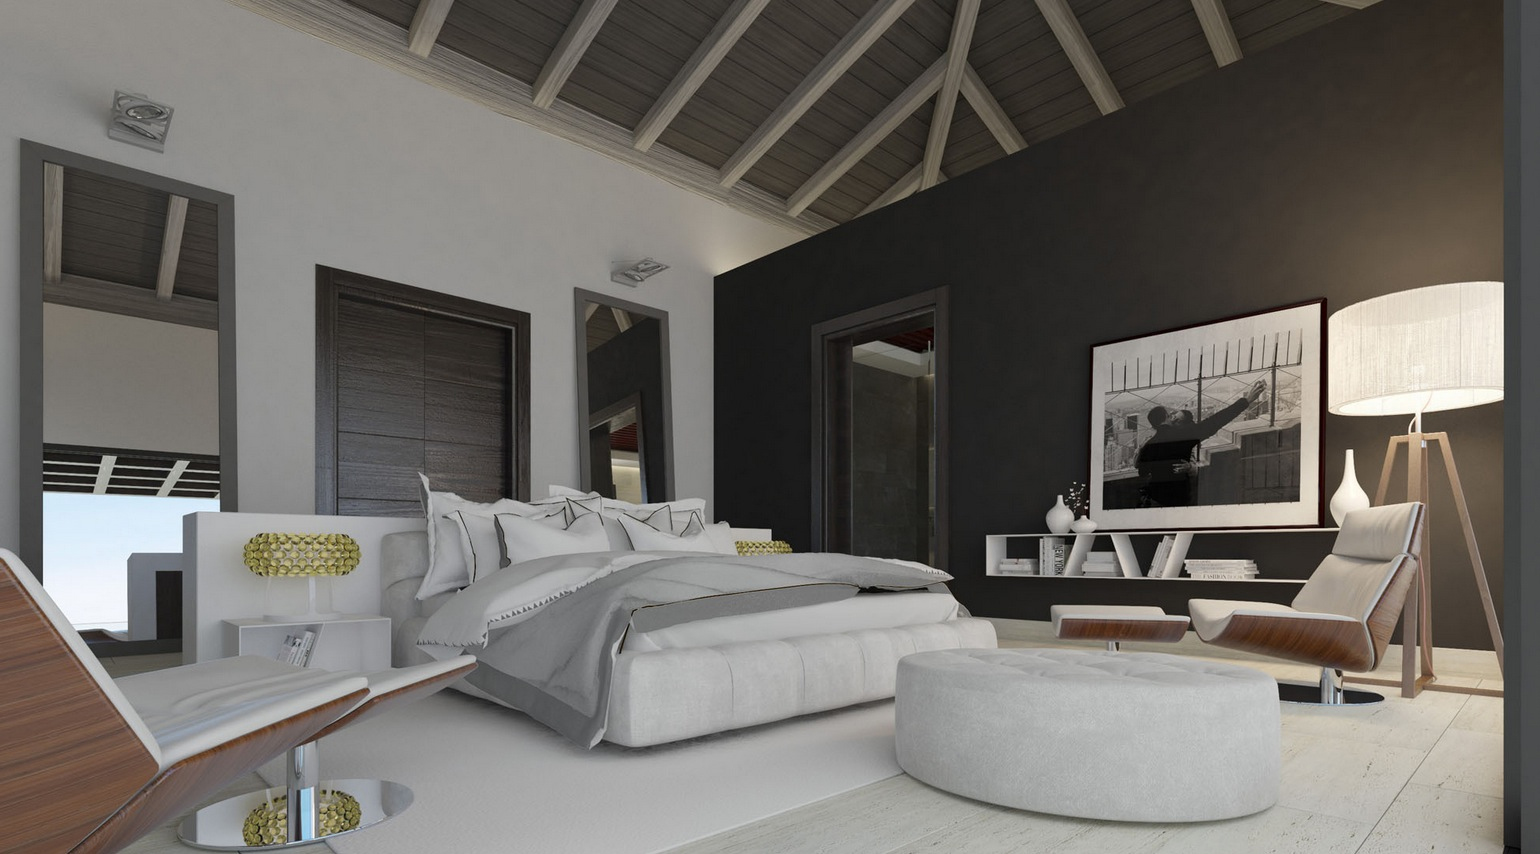 Luxurious 9 Bedroom Spanish Home With Indoor & Outdoor Pools 17